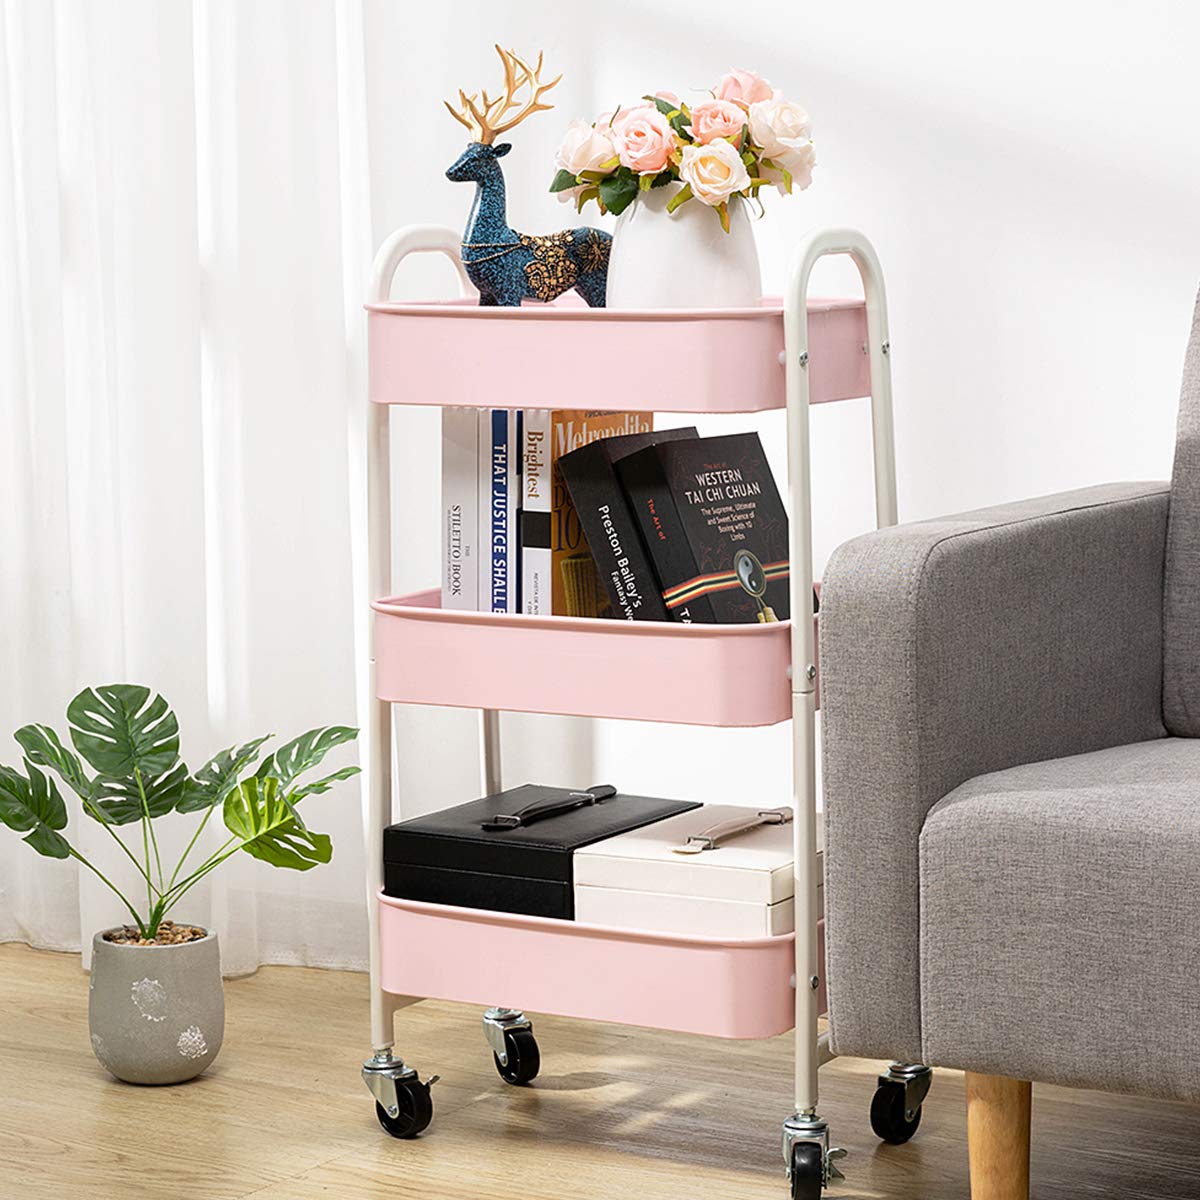 AGTEK Makeup Cart, Movable Rolling Organizer Cart, 3 Tier Metal Utility Cart, White - Pink